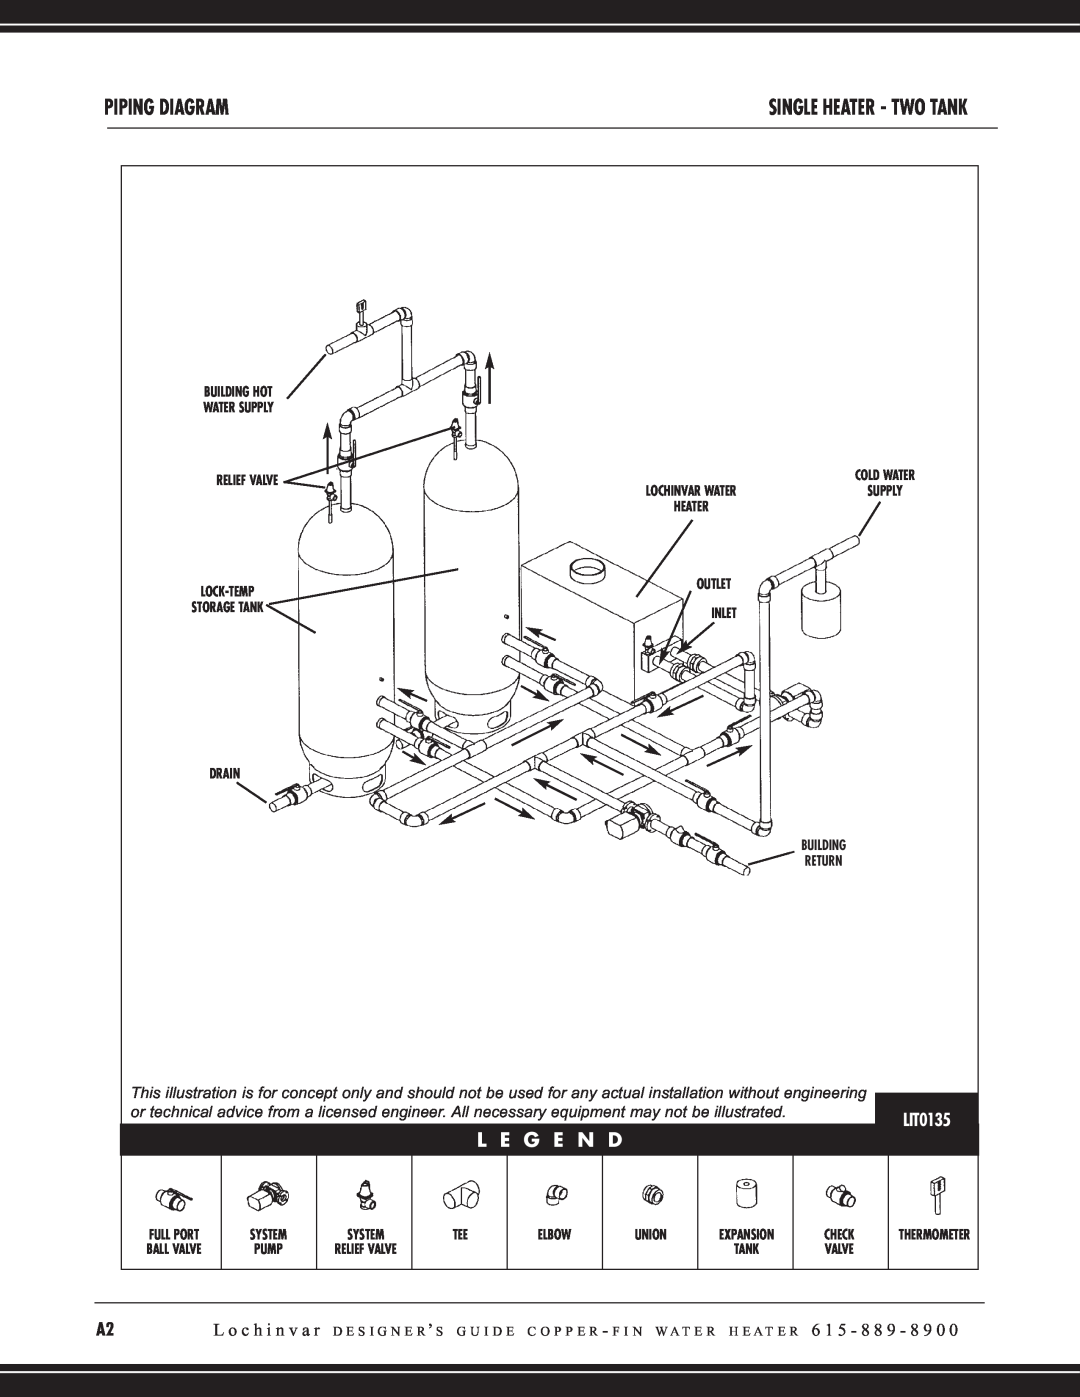 Lochinvar CW 745, CW 645 manual Piping Diagram, L E G E N D, Single Heater - Two Tank 